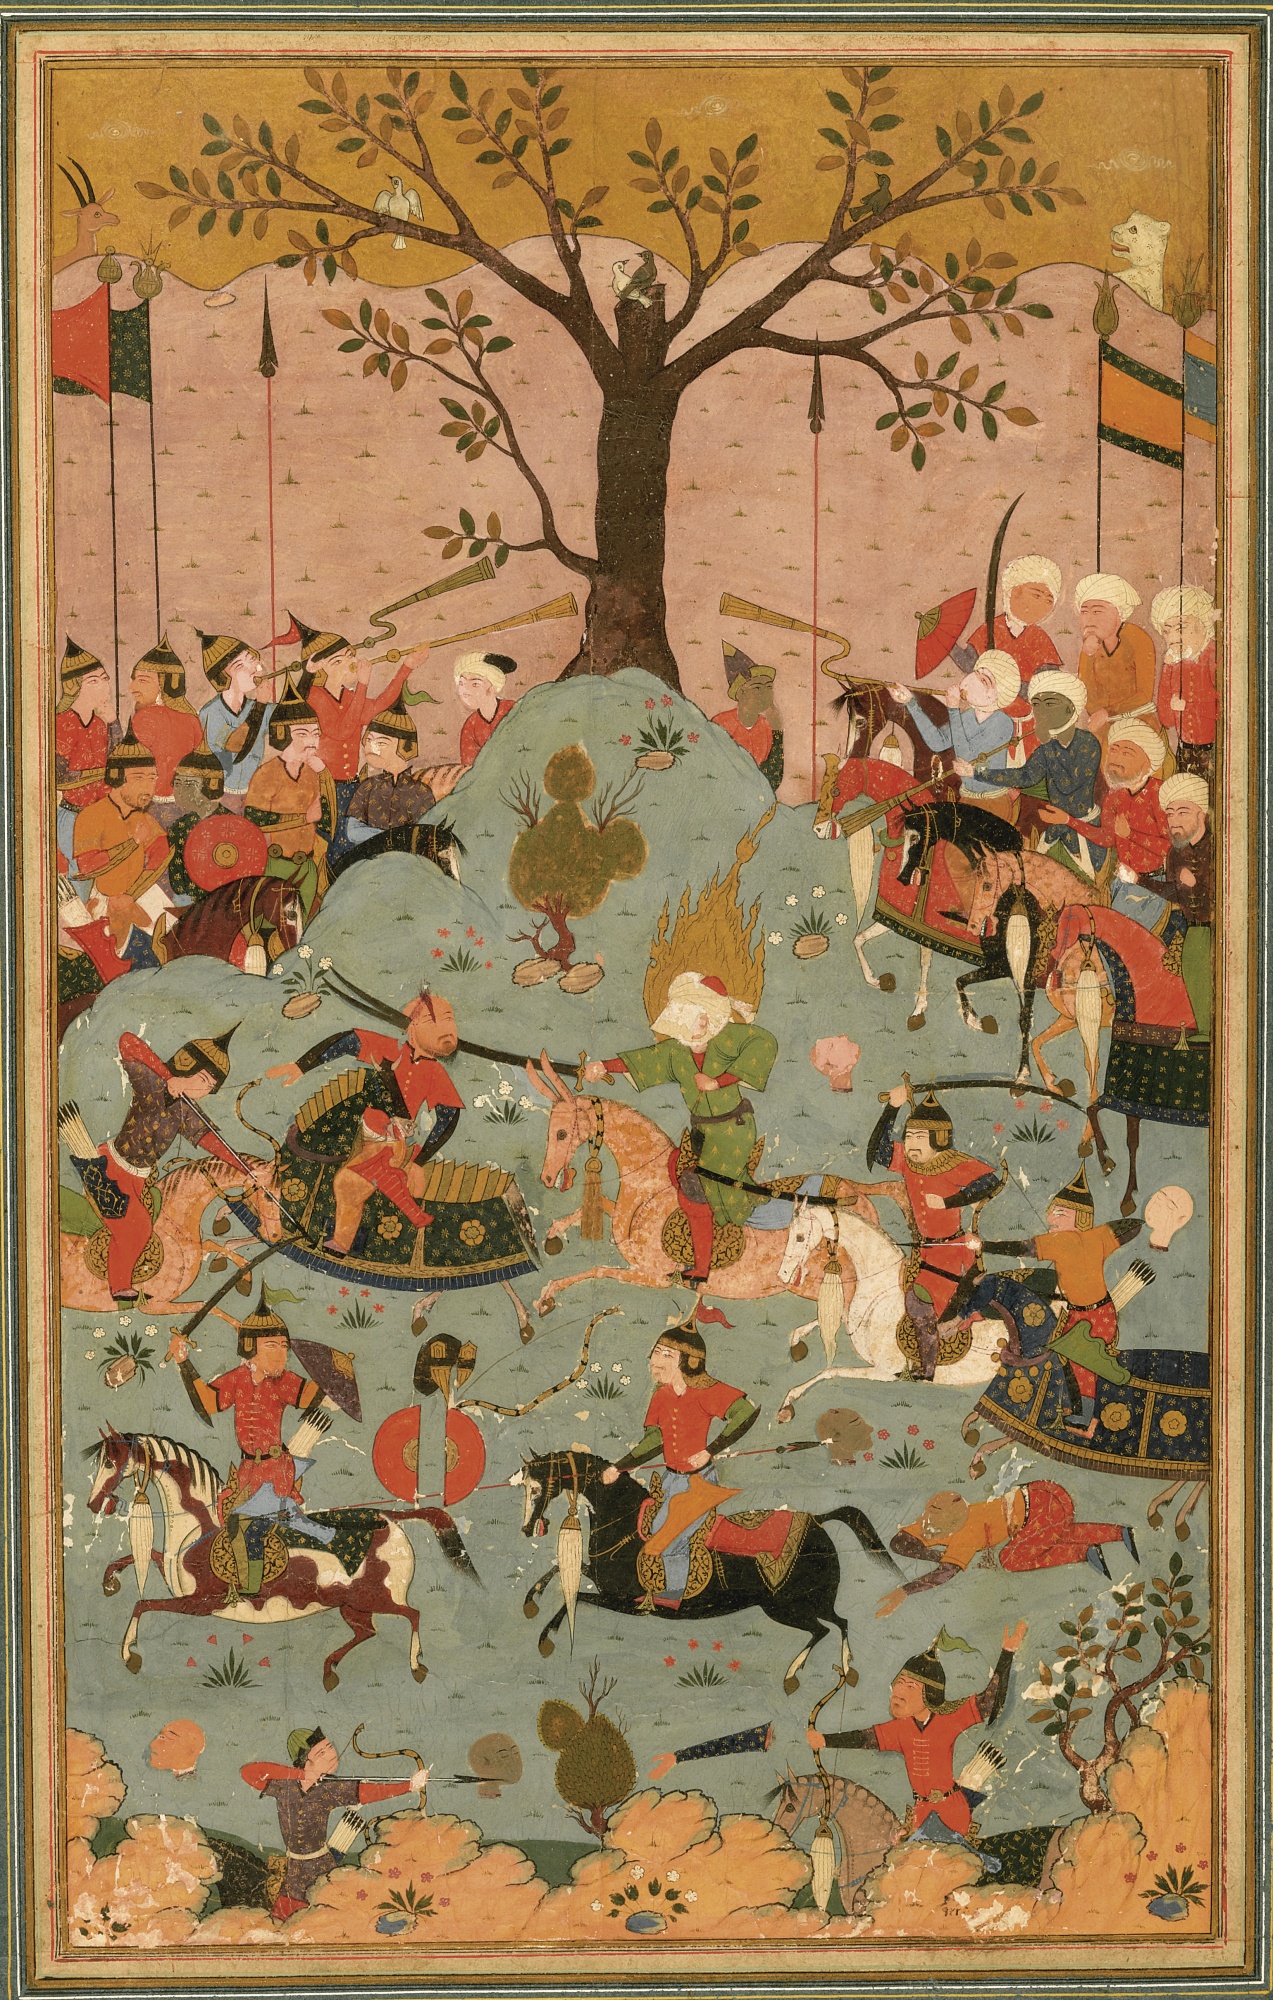 Bataille entre le premier calife Omeyyade Muawiya et le calife Ali en 657, la bataille de Siffin , illustration persane safavide 1516.